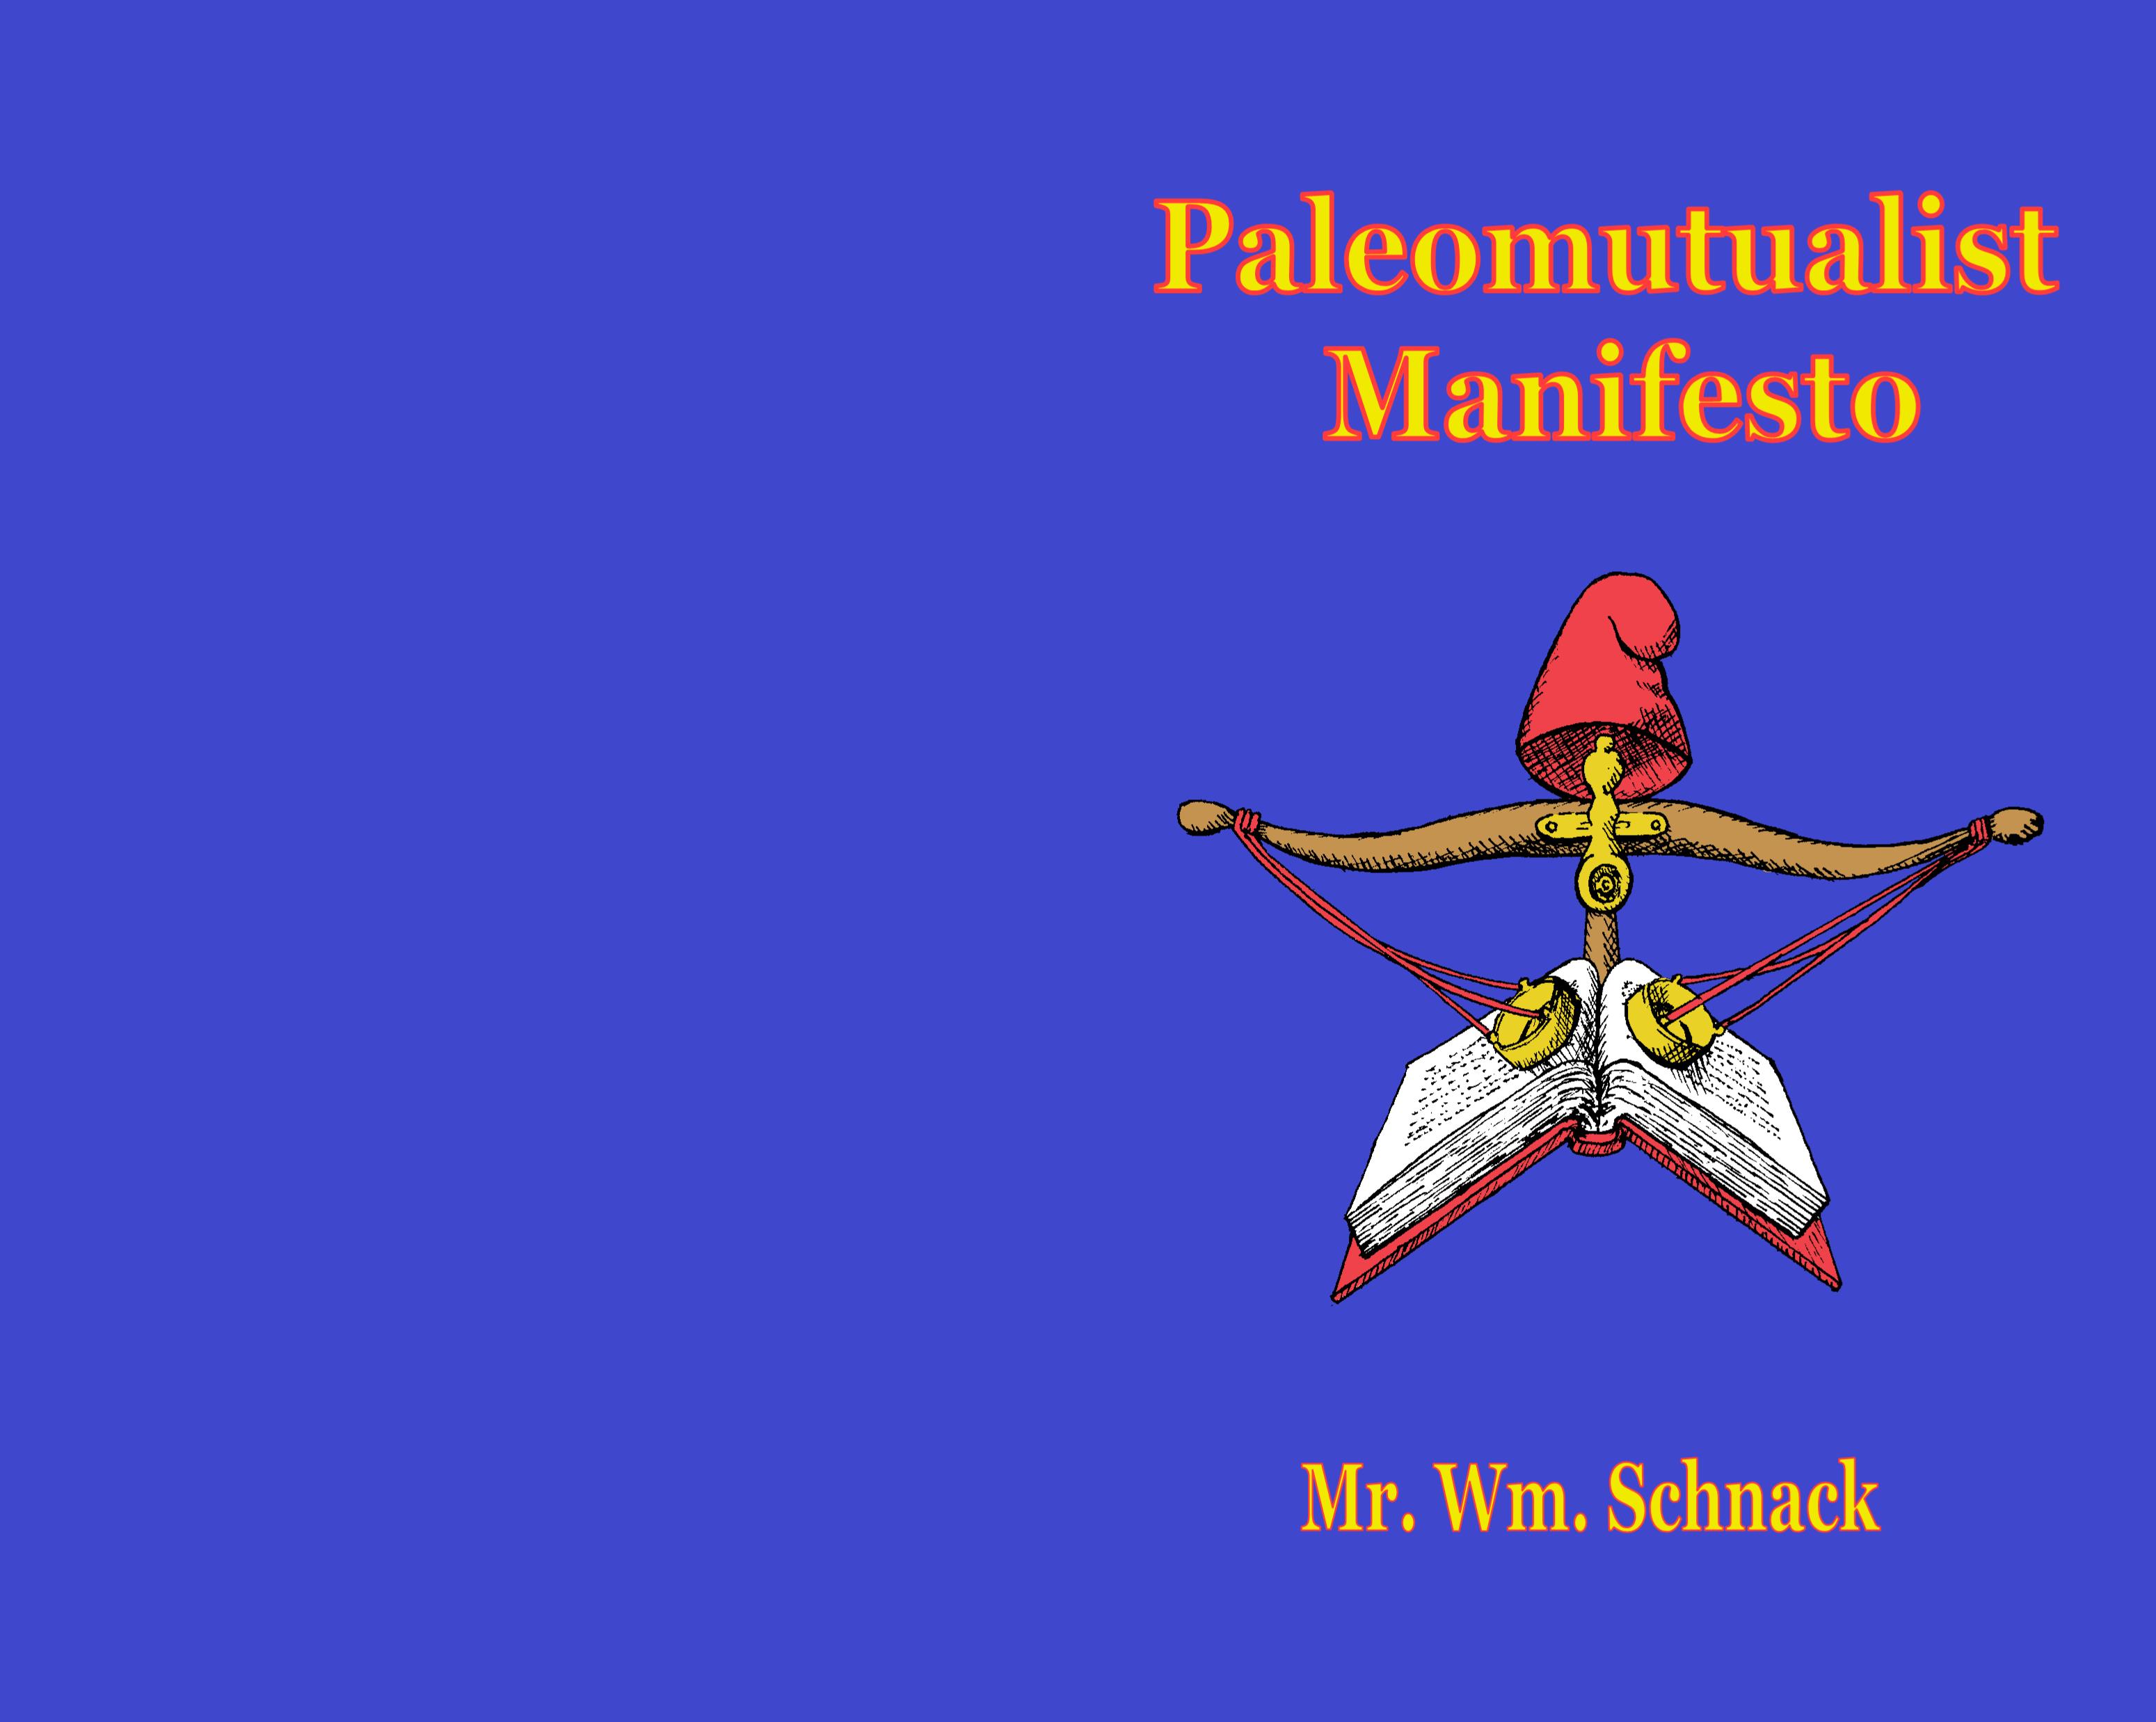 The Paleomutualist Manifesto cover image